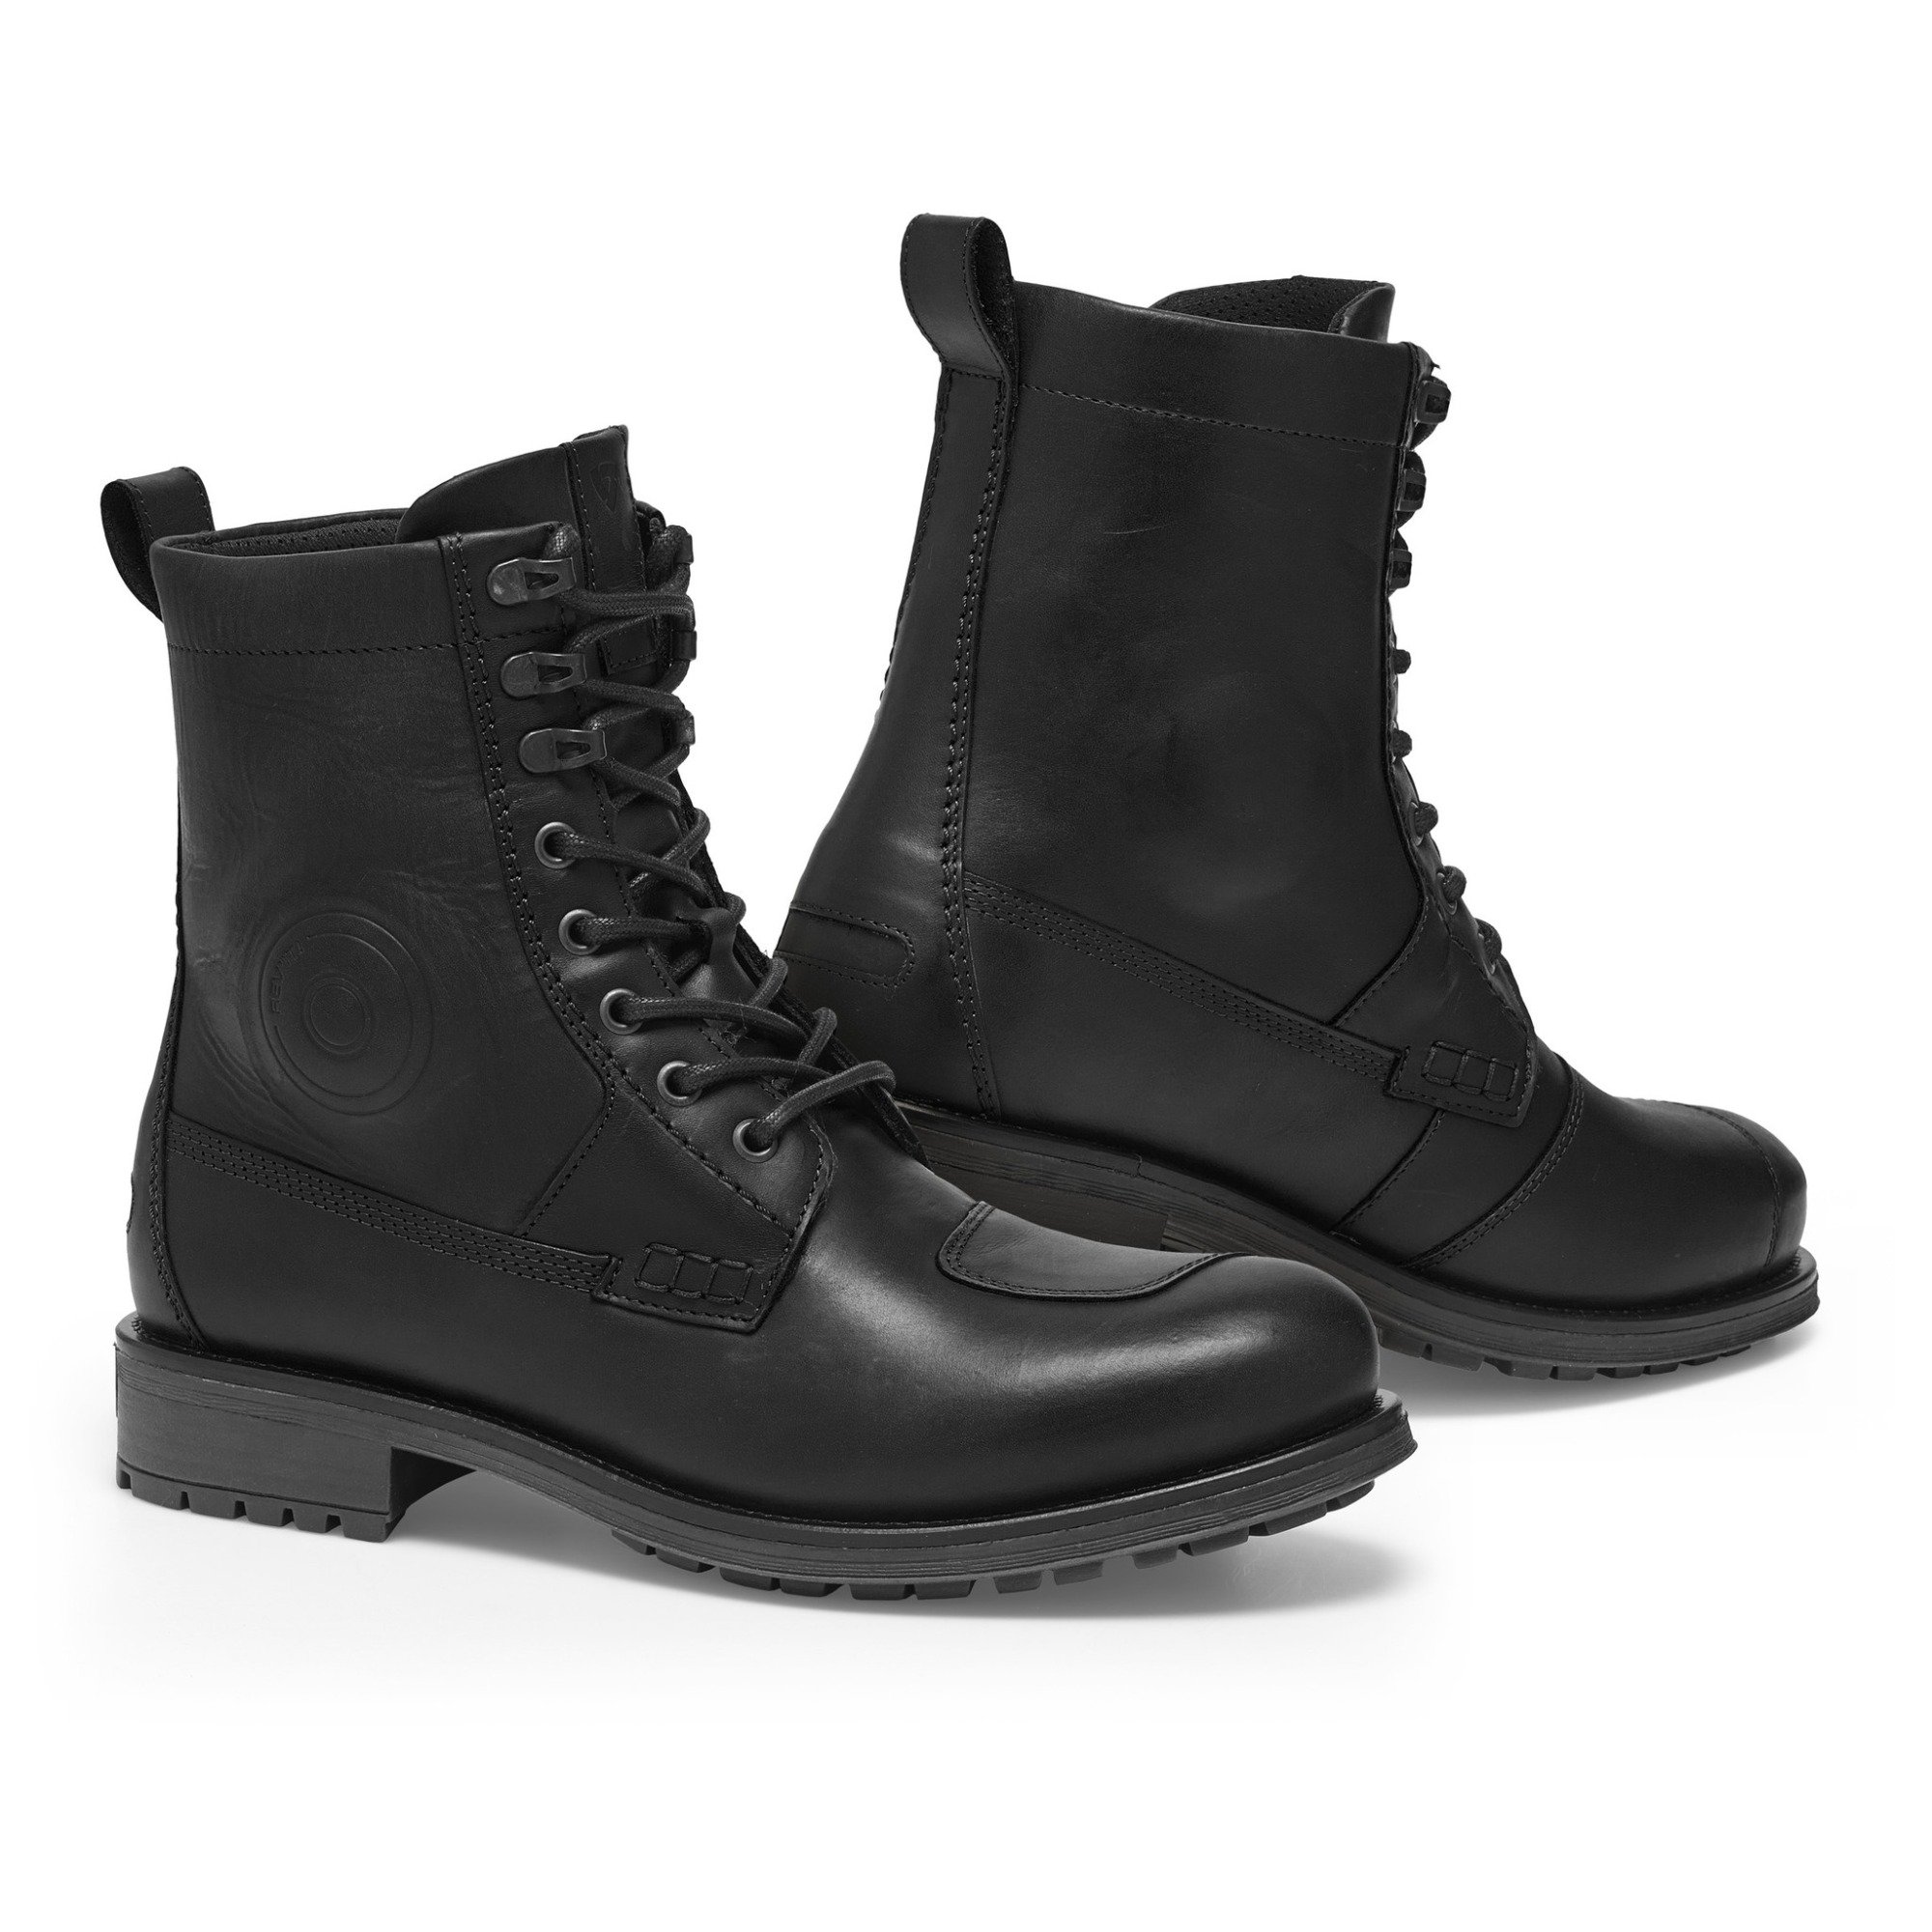 Image of EU REV'IT! Portland Chaussures Noir Taille 39